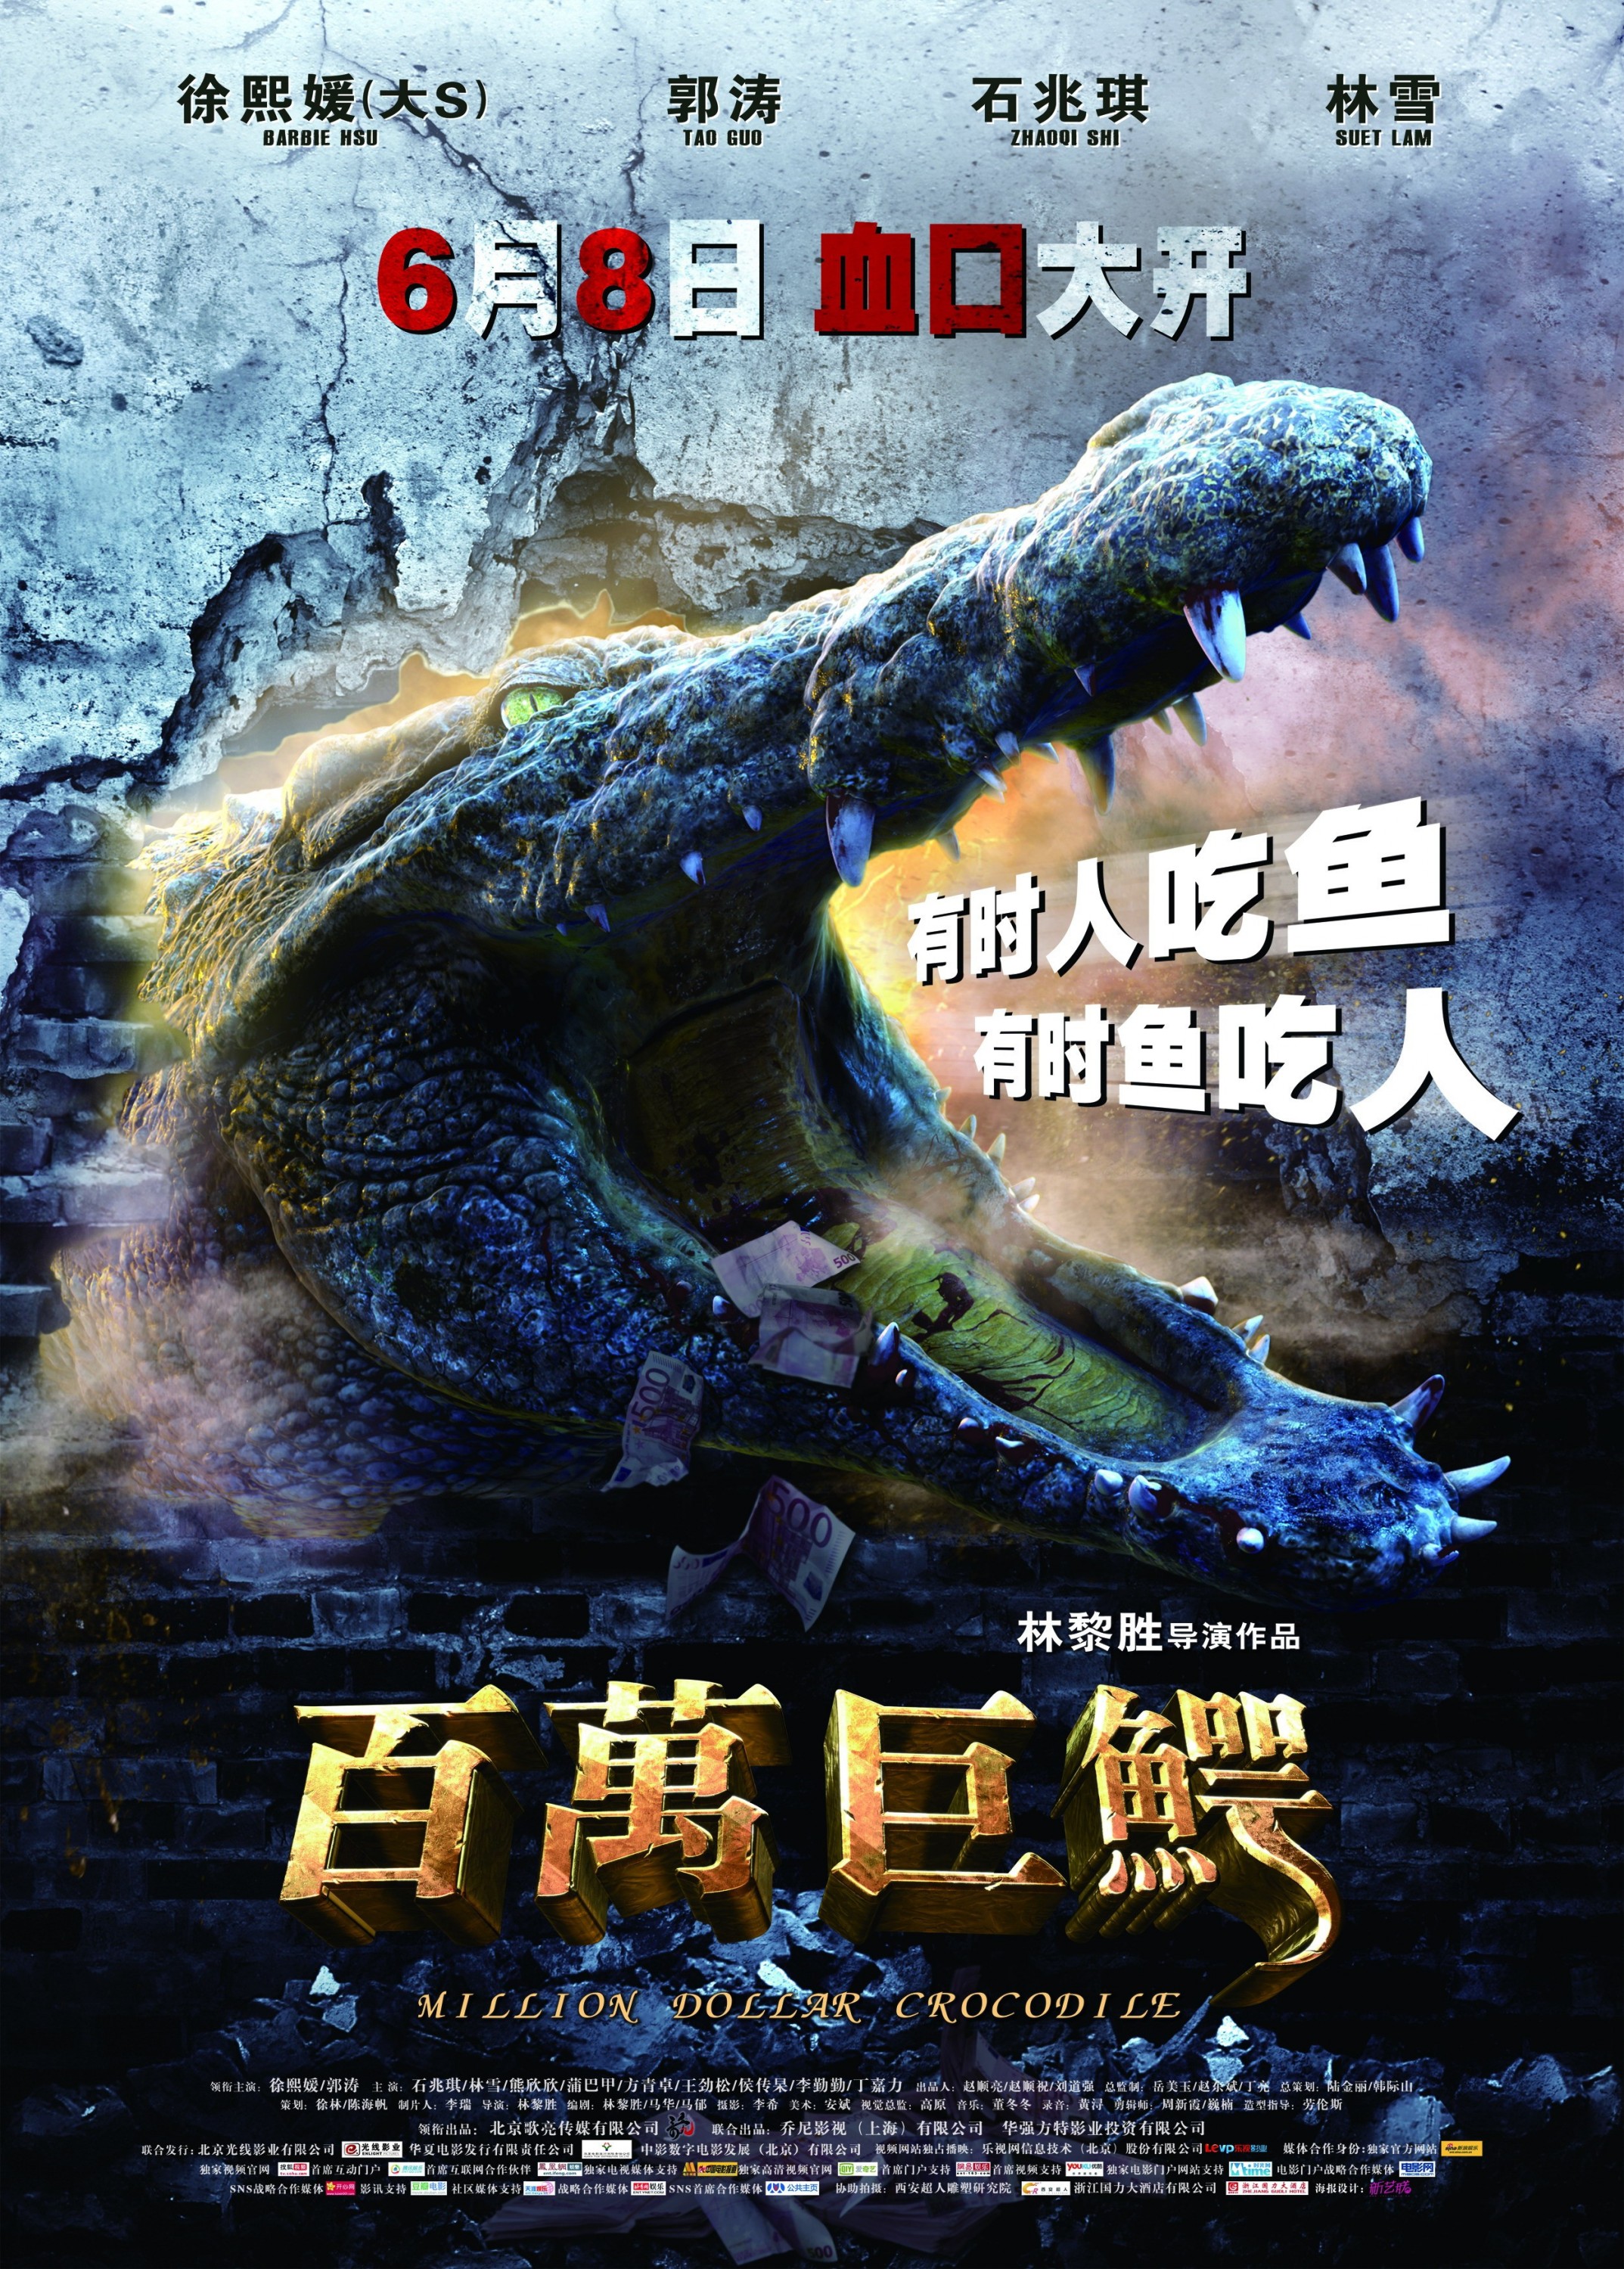 Mega Sized Movie Poster Image for Million Dollar Crocodile (#3 of 5)